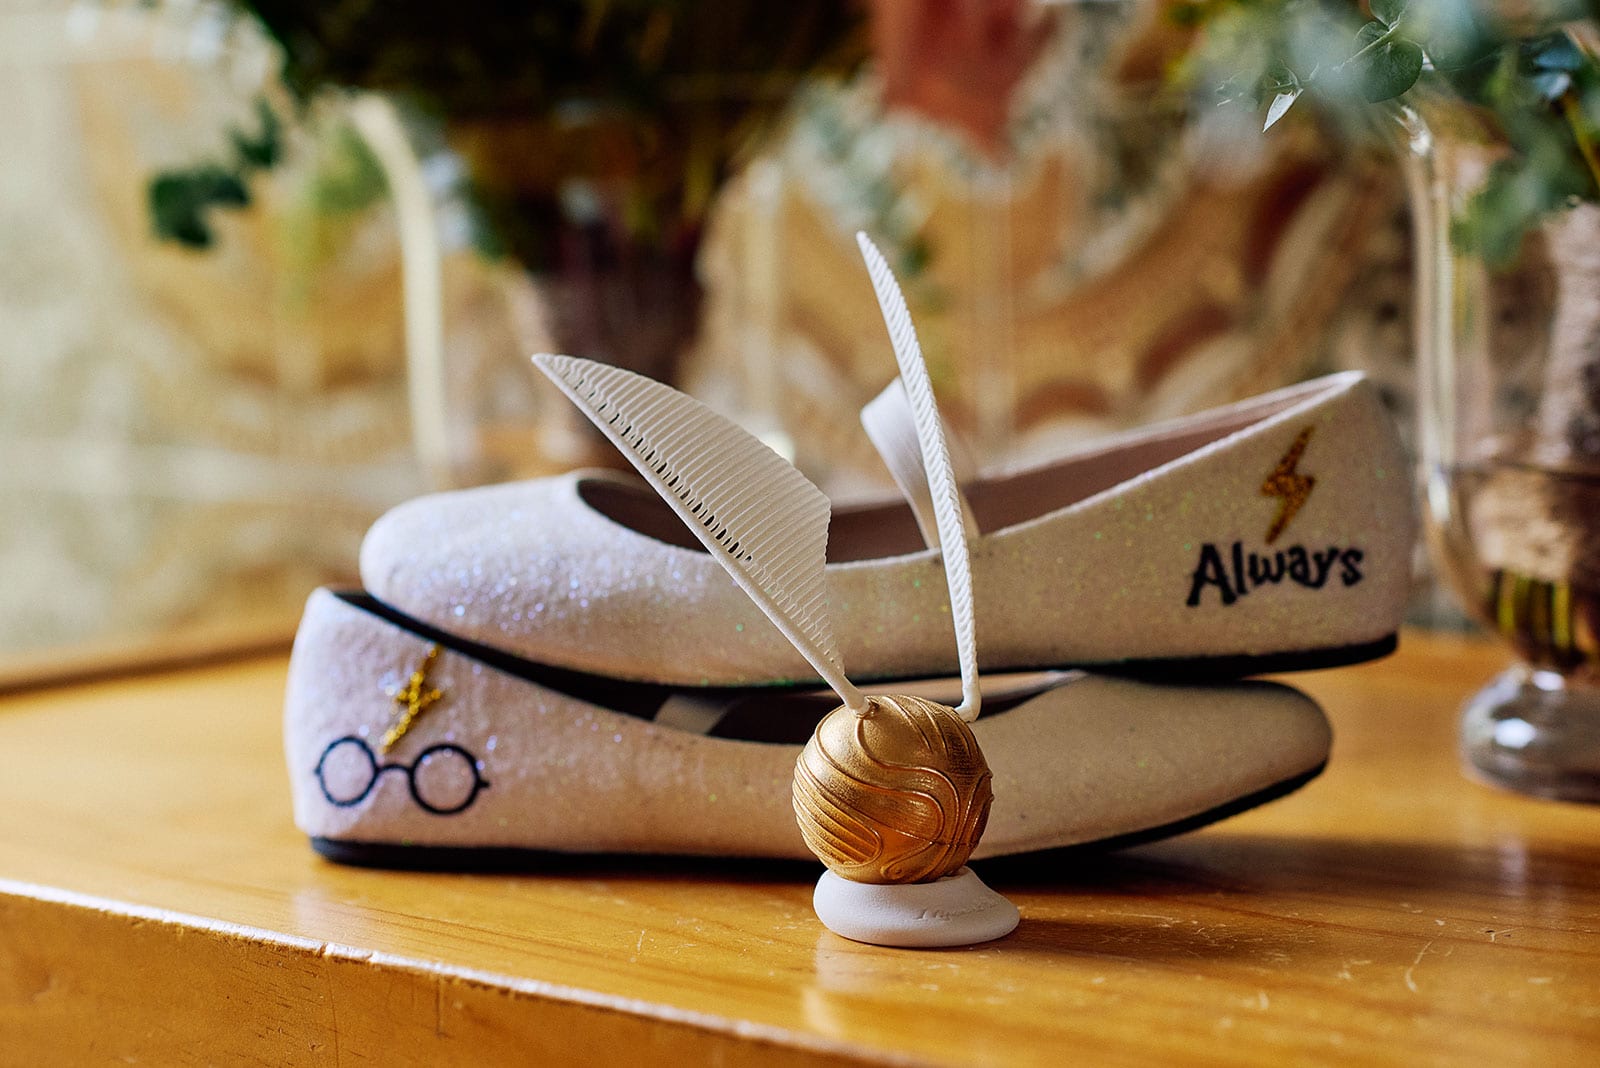 Bride's shoes had a Harry Potter theme